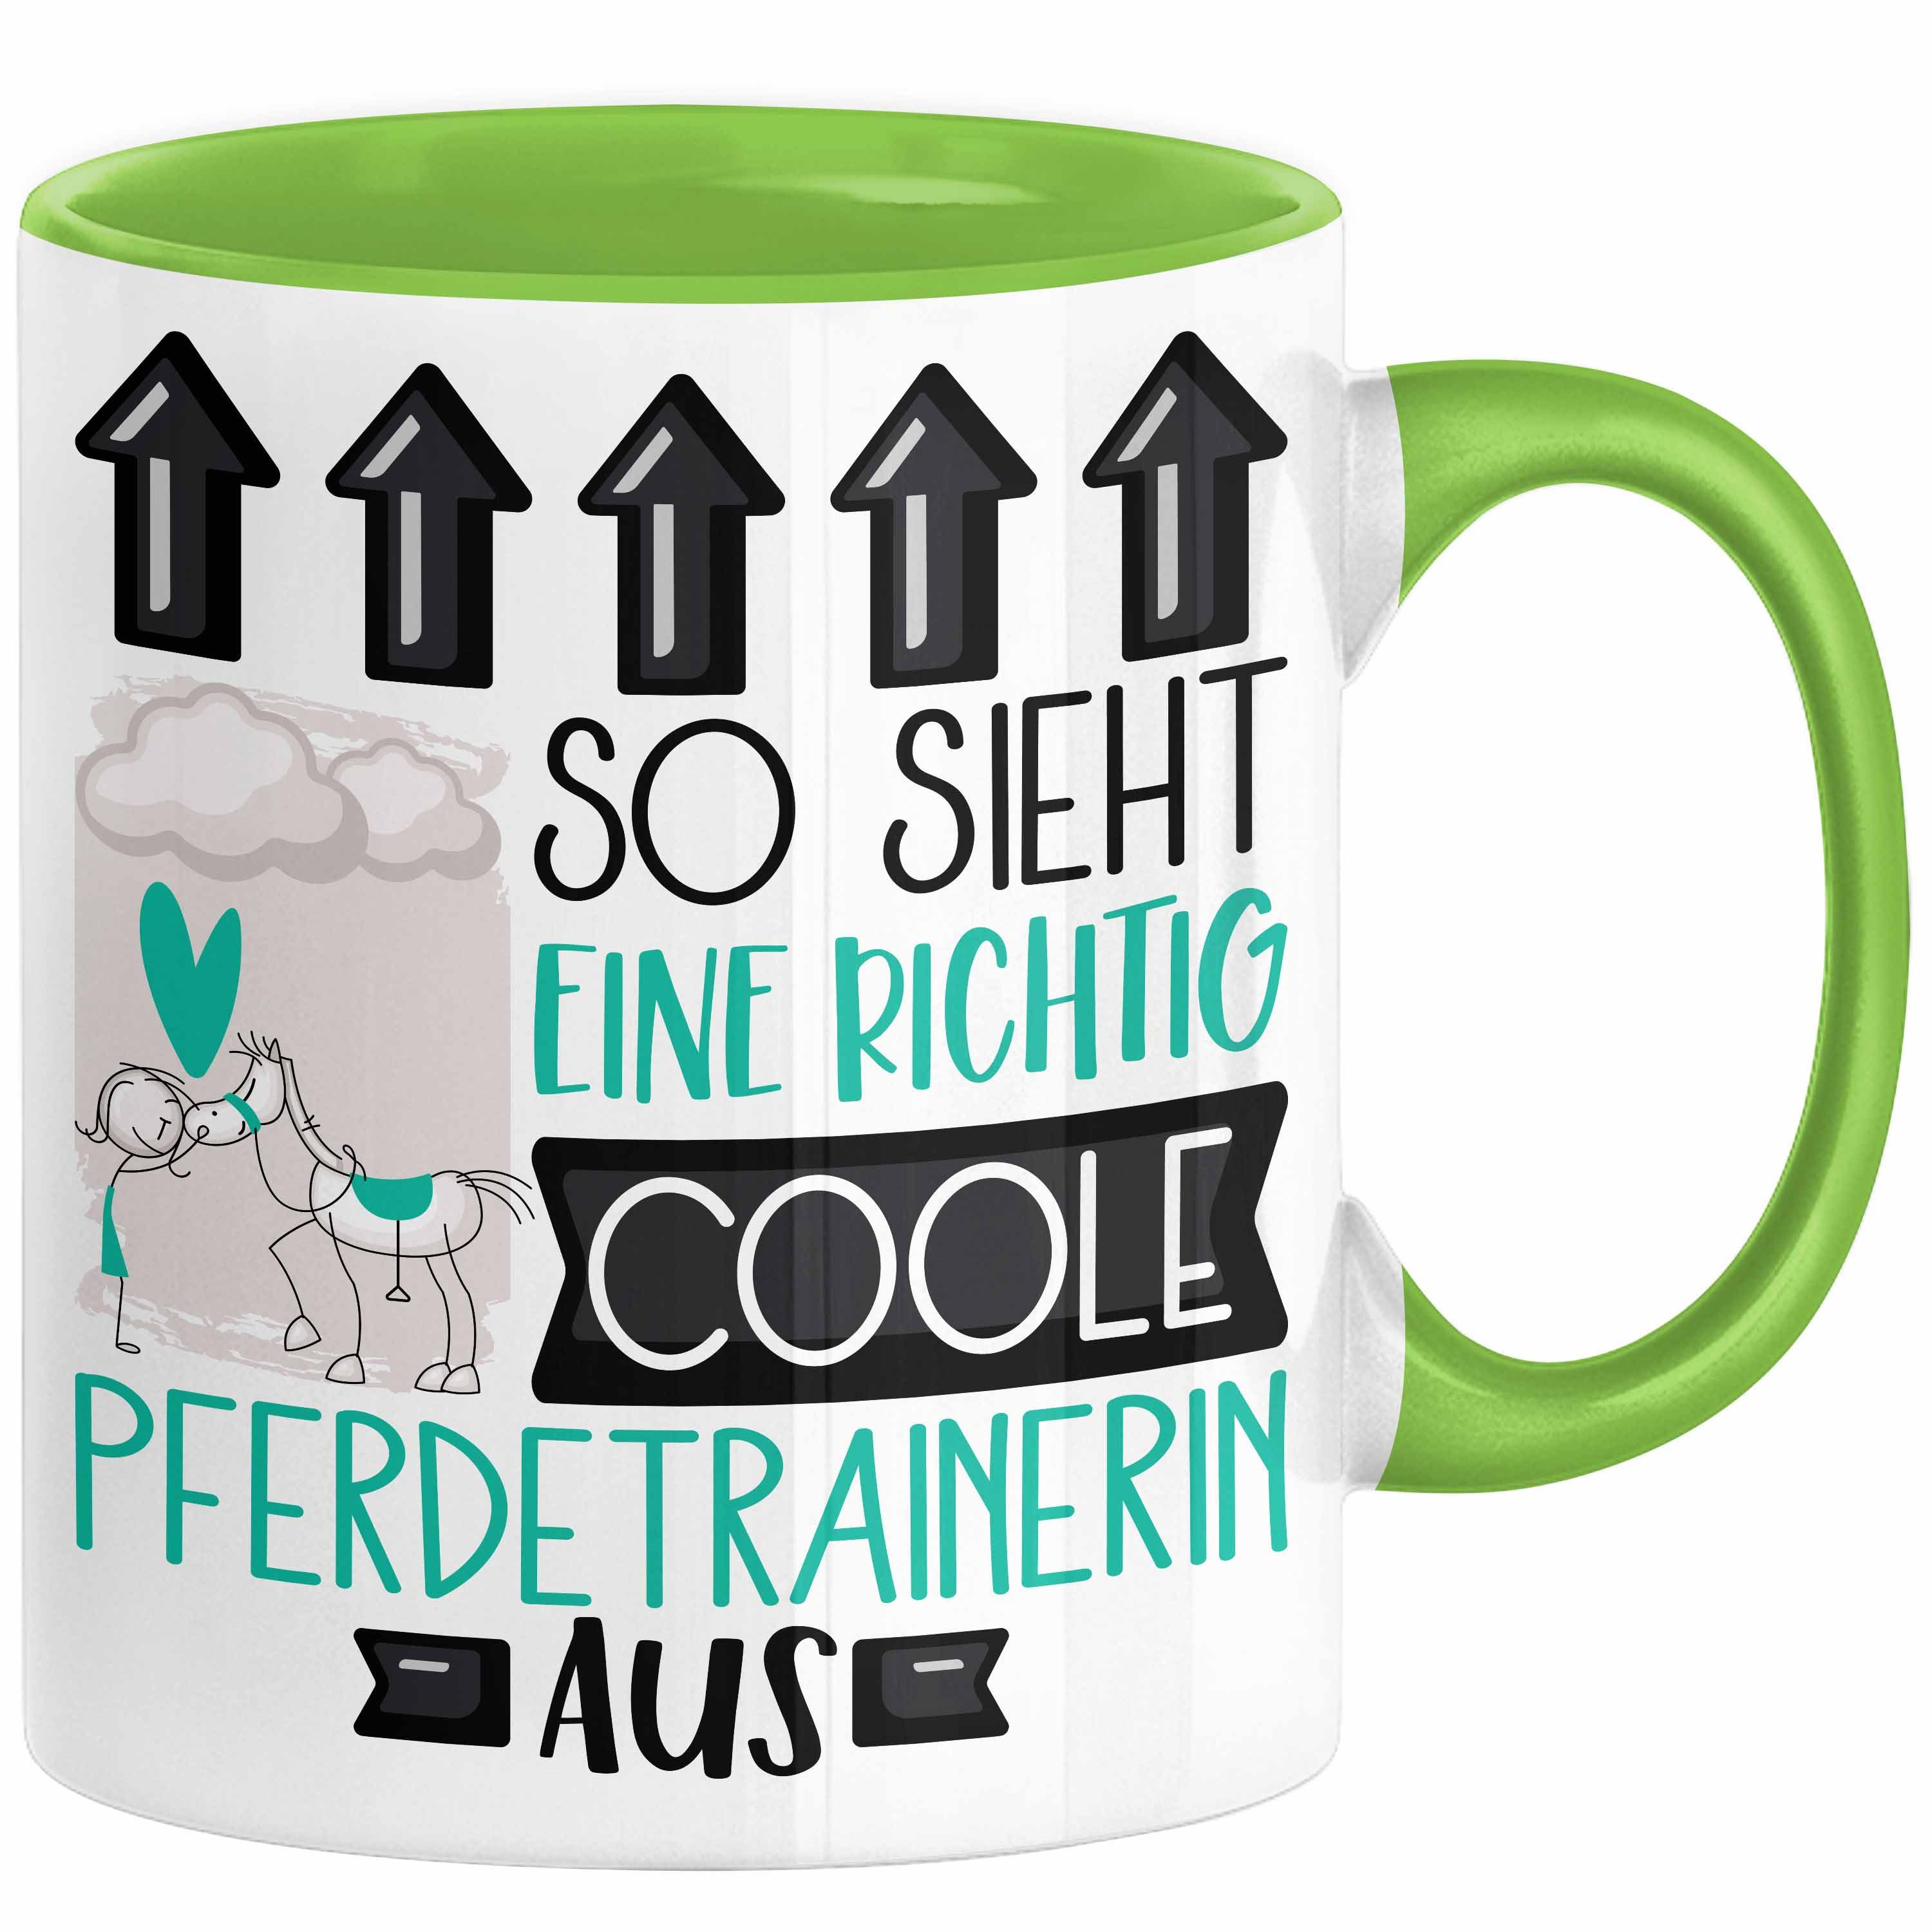 Trendation Tasse Pferdetrainerin Geschenk Tasse Lustig Geschenkidee für Pferdetrainerin